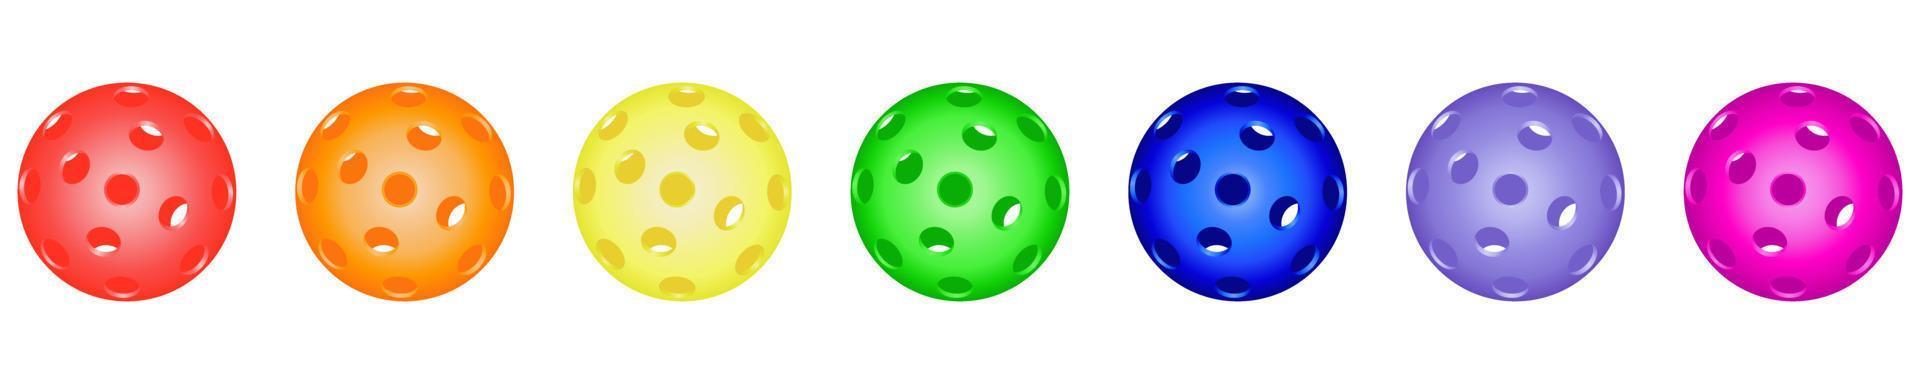 definir bolas de pickleball brilhantes coloridas. equipamentos